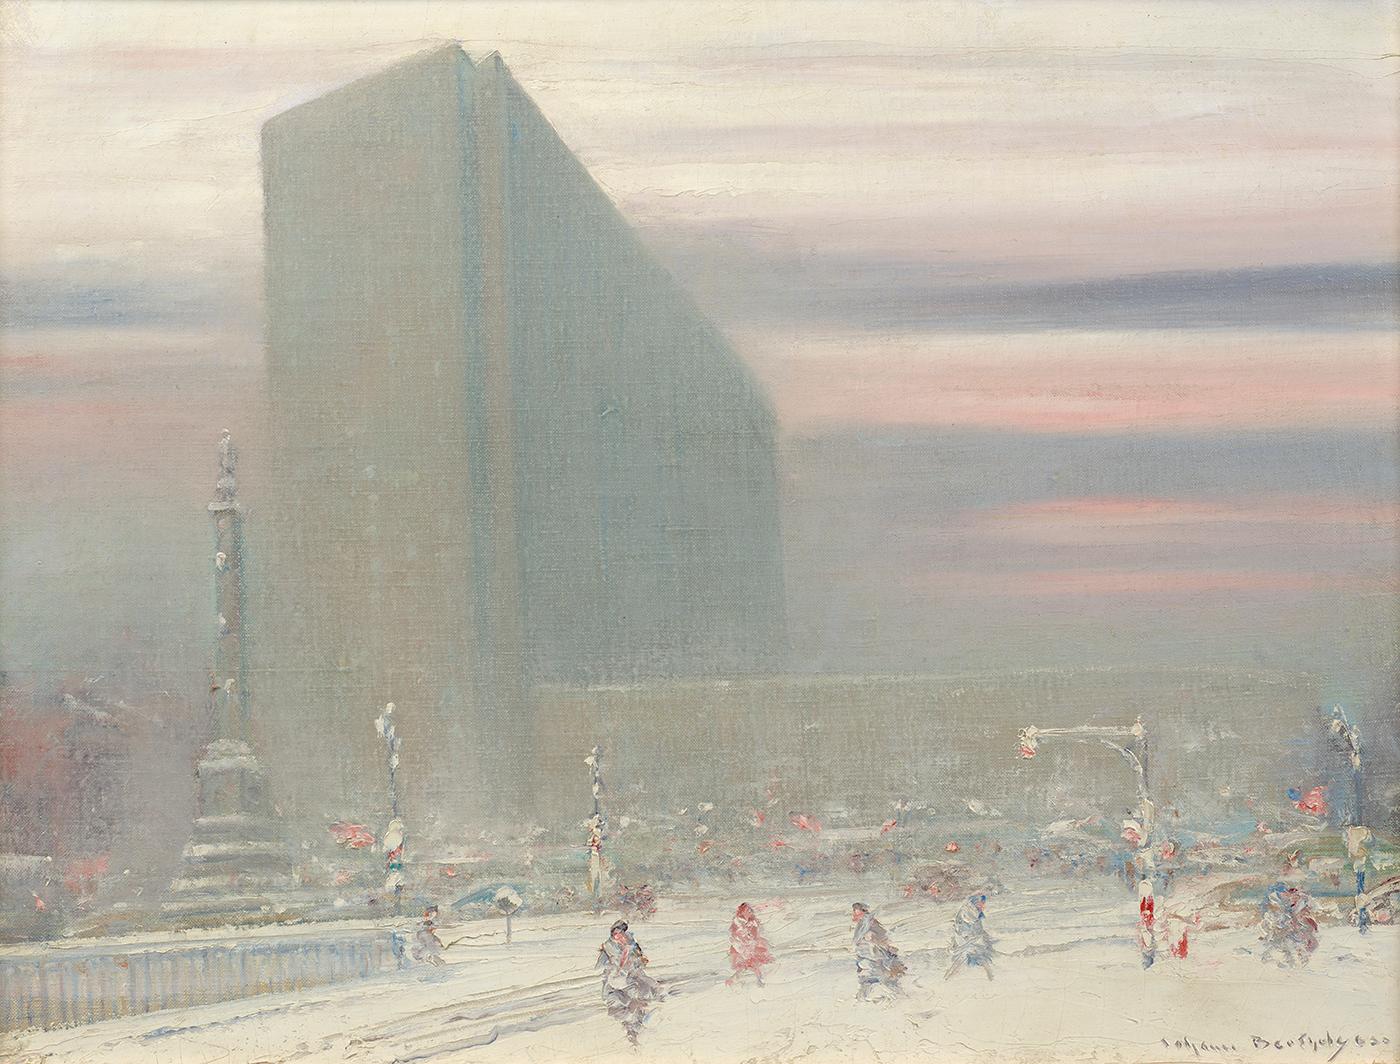 New York Coliseum - Painting by Johann Berthelsen